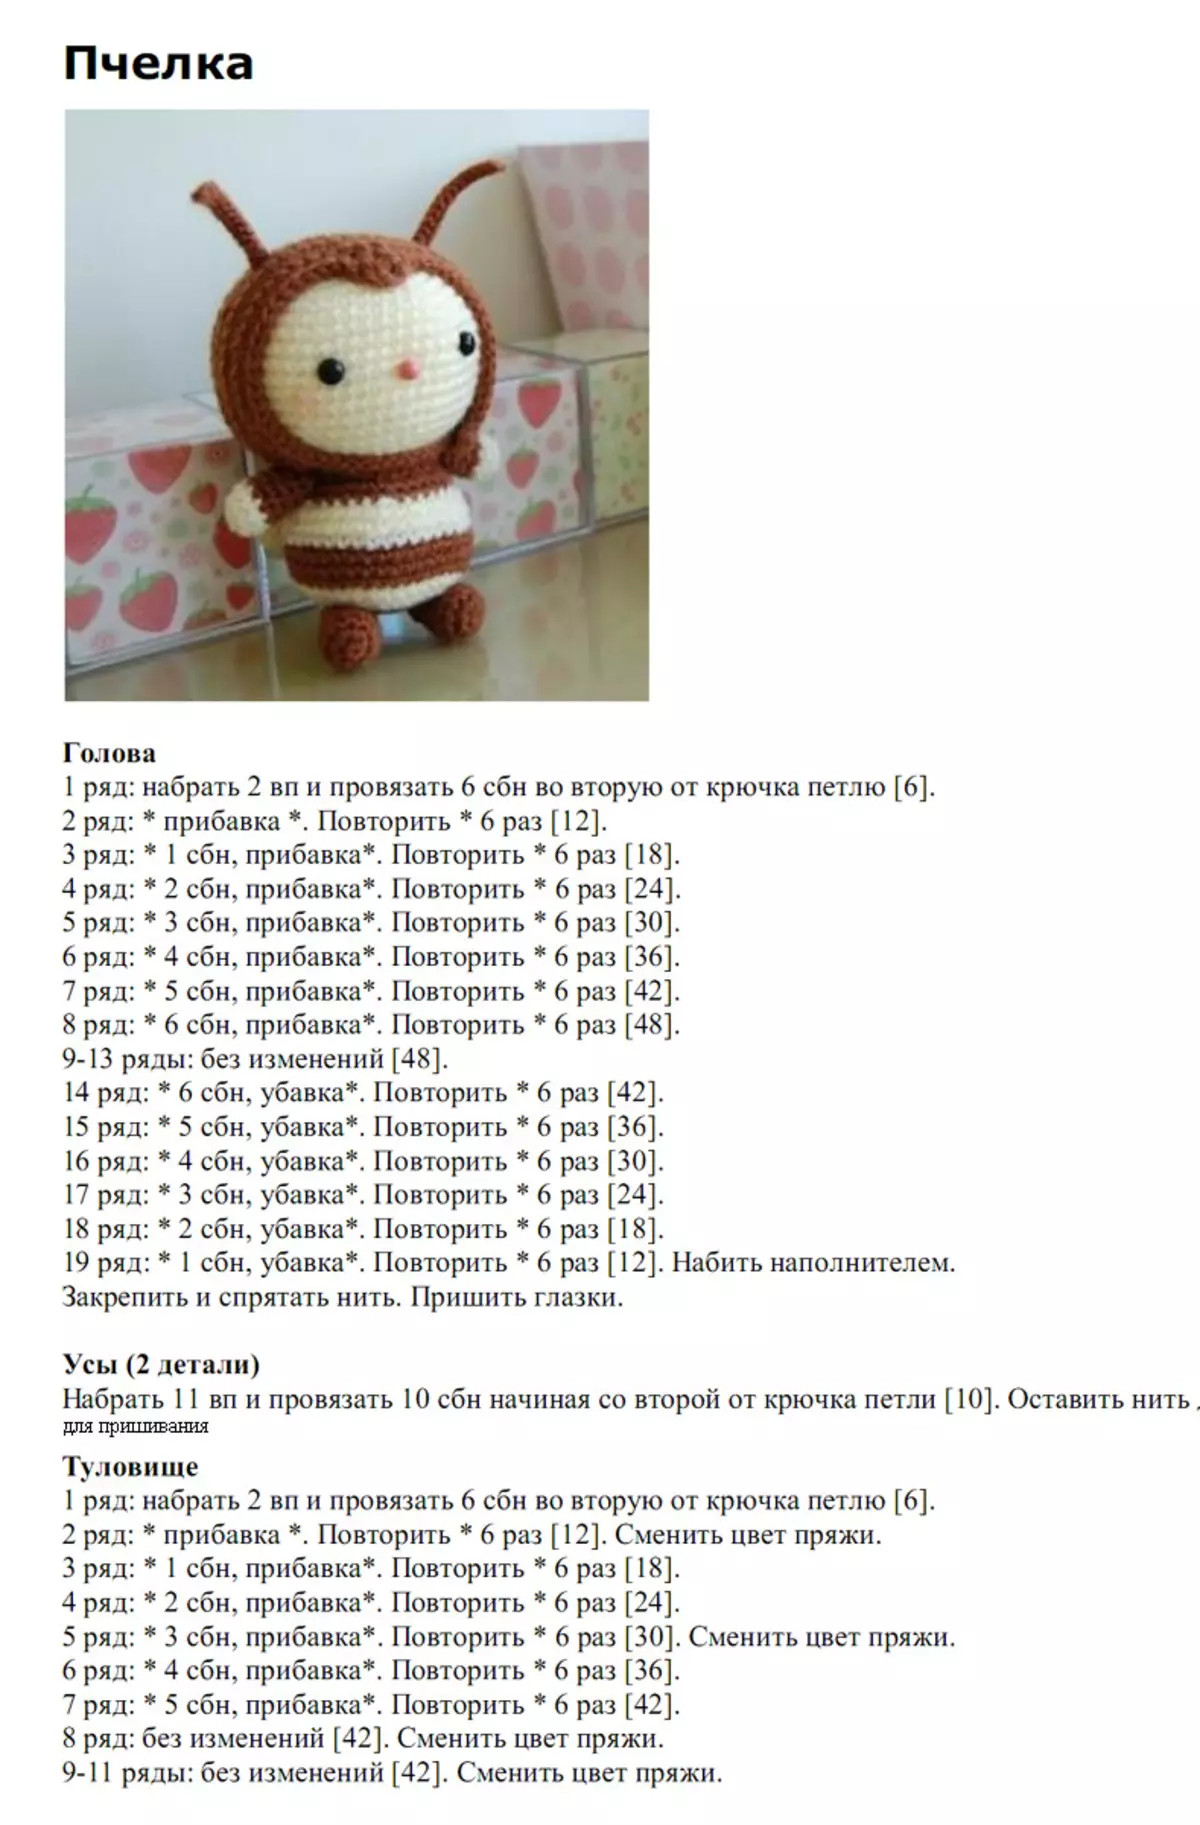 Amigurumi para iniciantes (80 fotos): crochet crochet crochet crochet. Descrições de trabalho detalhadas, master classes 19332_10